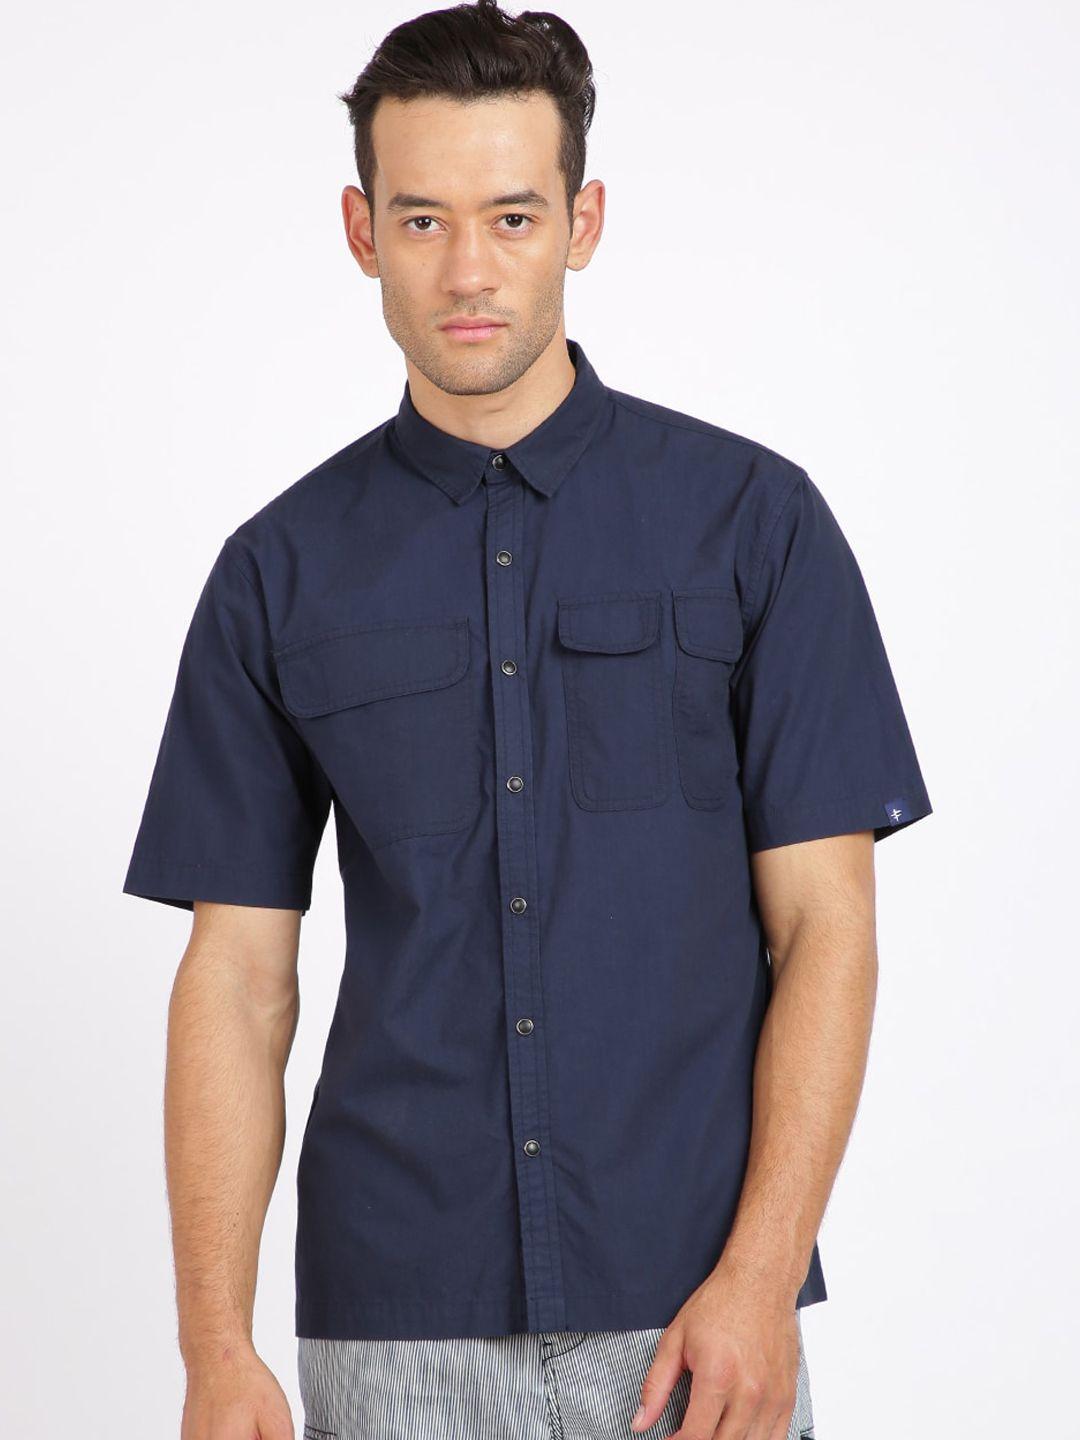 breakbounce men navy blue regular fit solid casual shirt